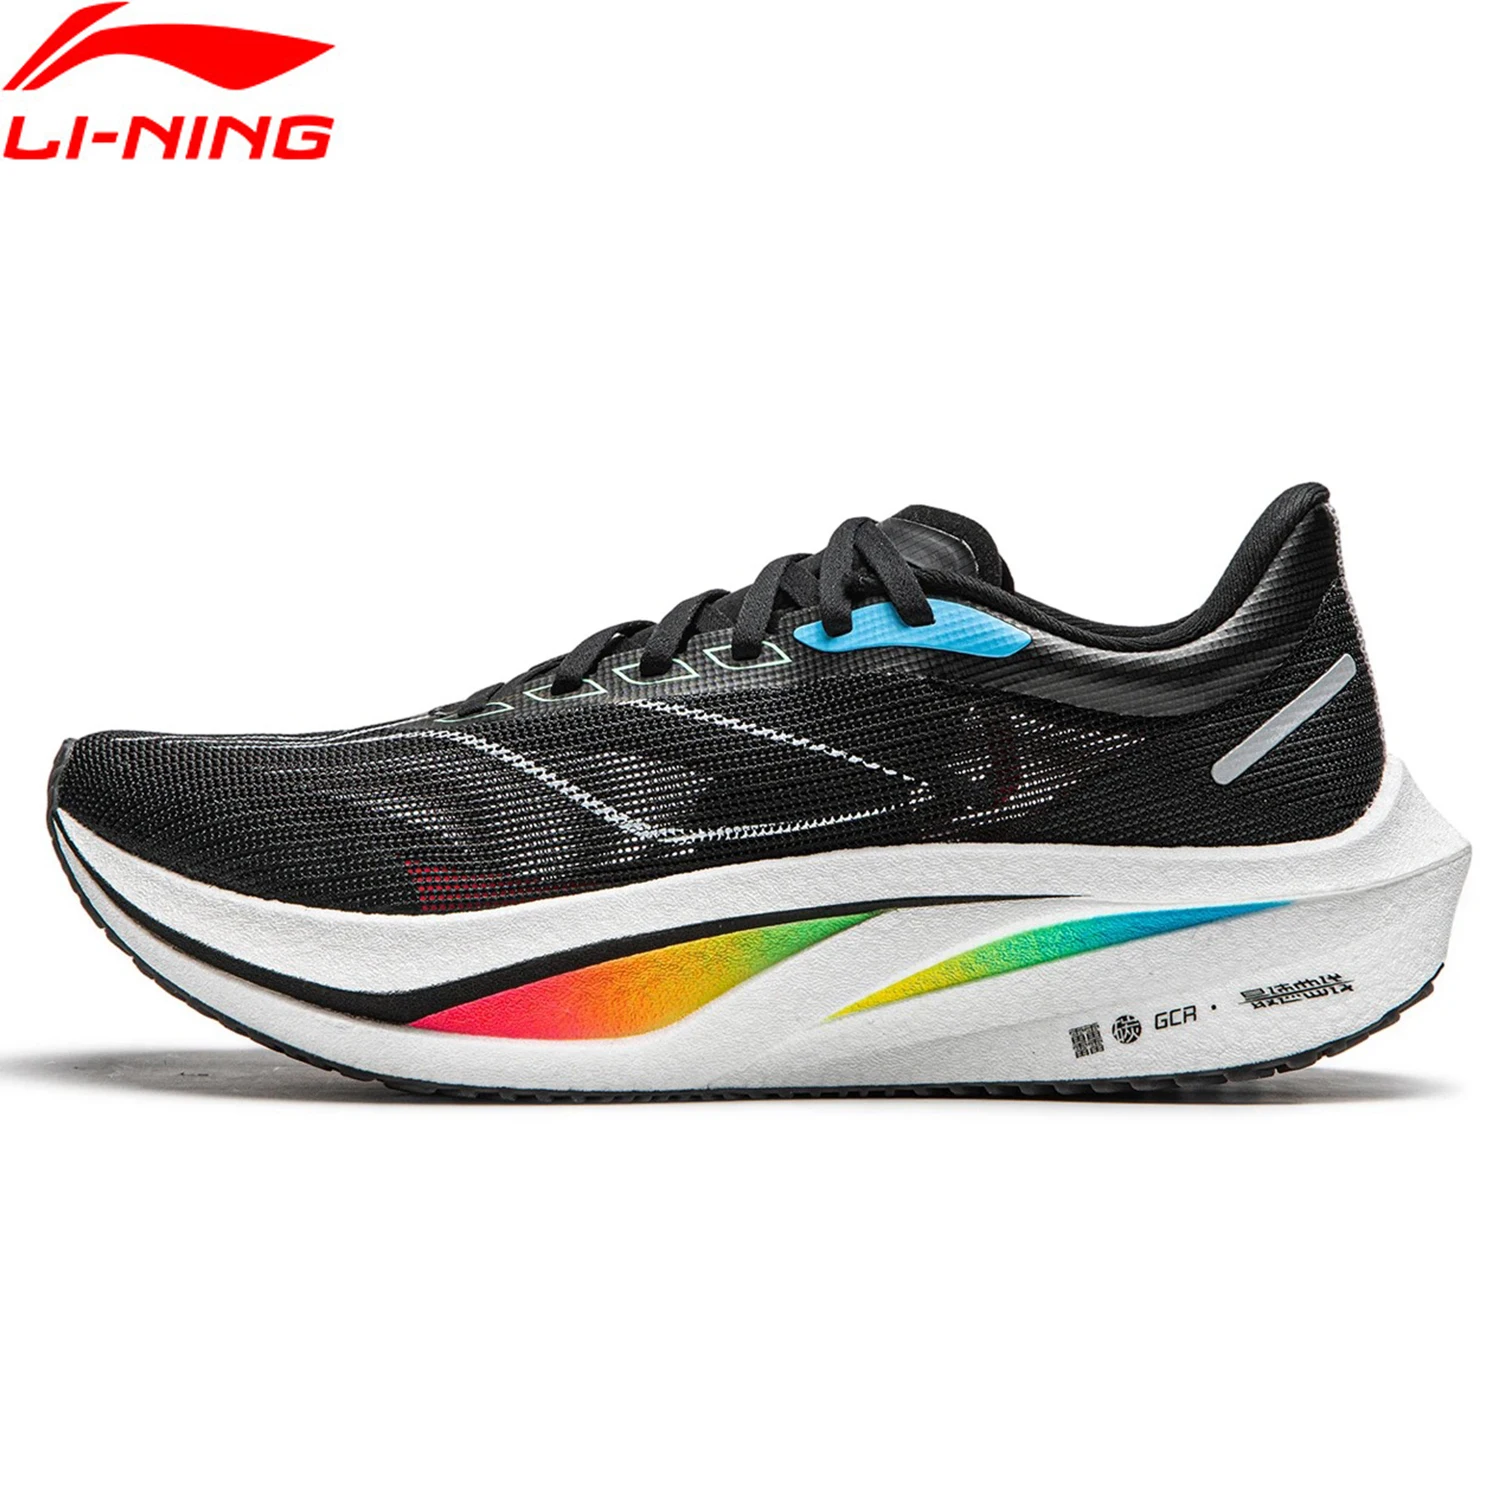 Li-Ning Men FEIDIAN 4 CHALLENGER Racing Running Shoes CARBON-FIBER PLATE BOOM Cushion Sport Shoes Breathable Sneakers ARMU005